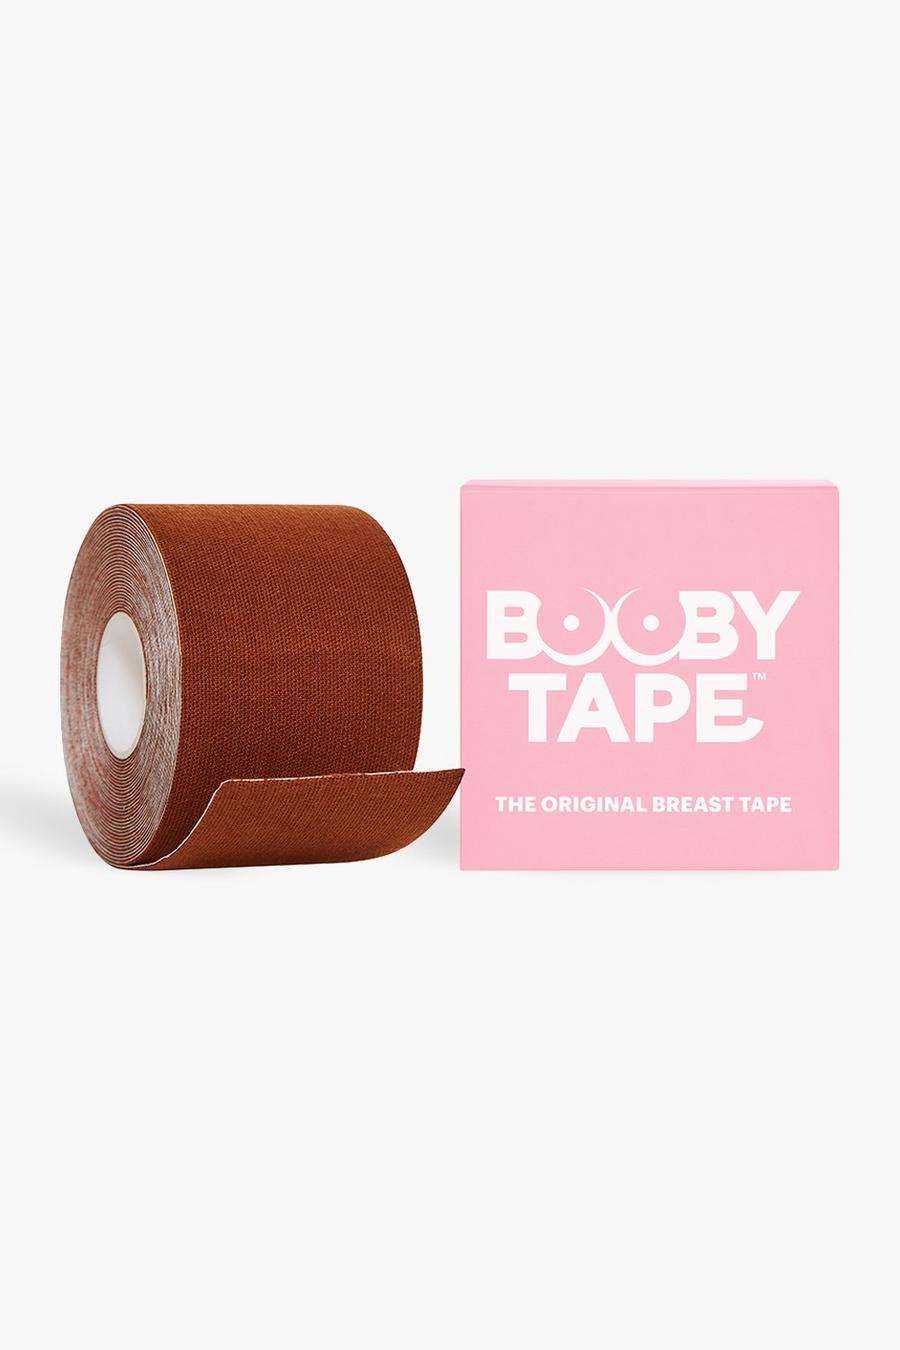 Booby Tape braun 5m Rolle